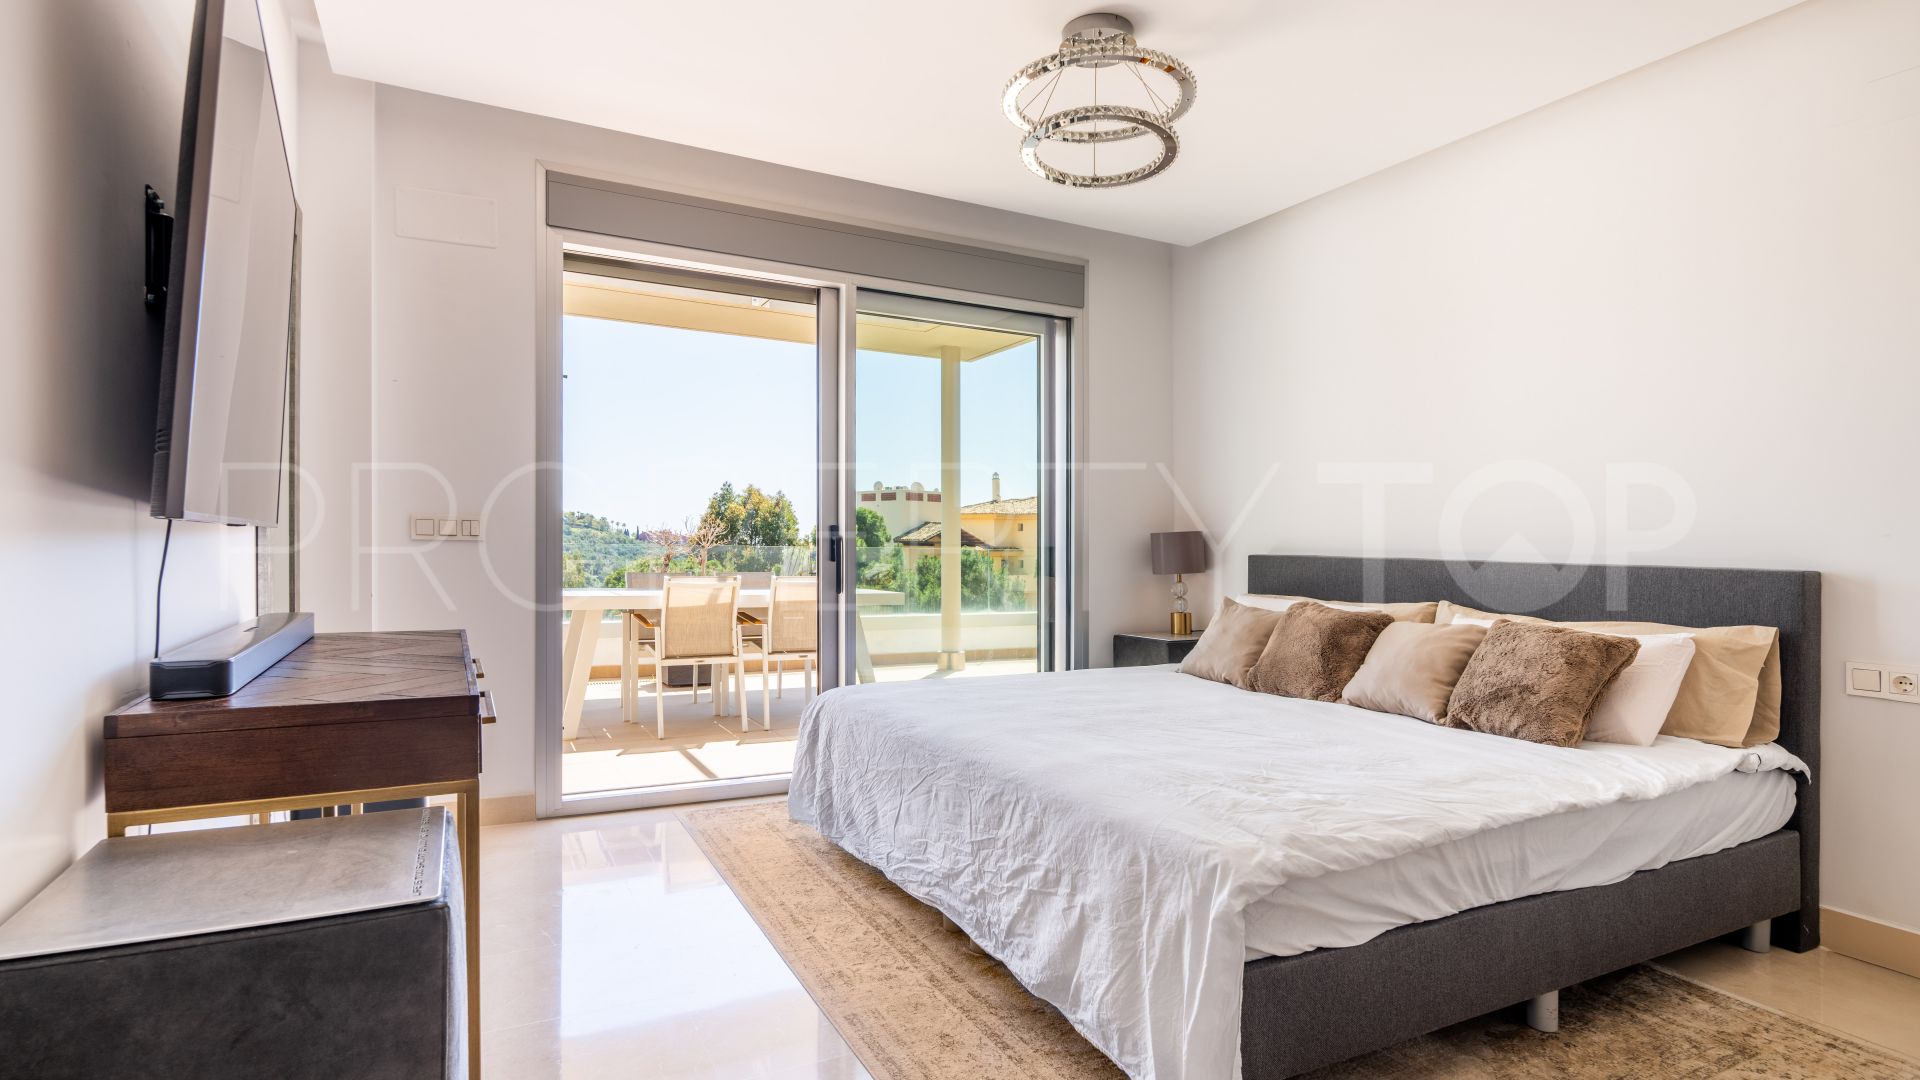 3 bedrooms duplex penthouse in La Reserva de Alcuzcuz for sale